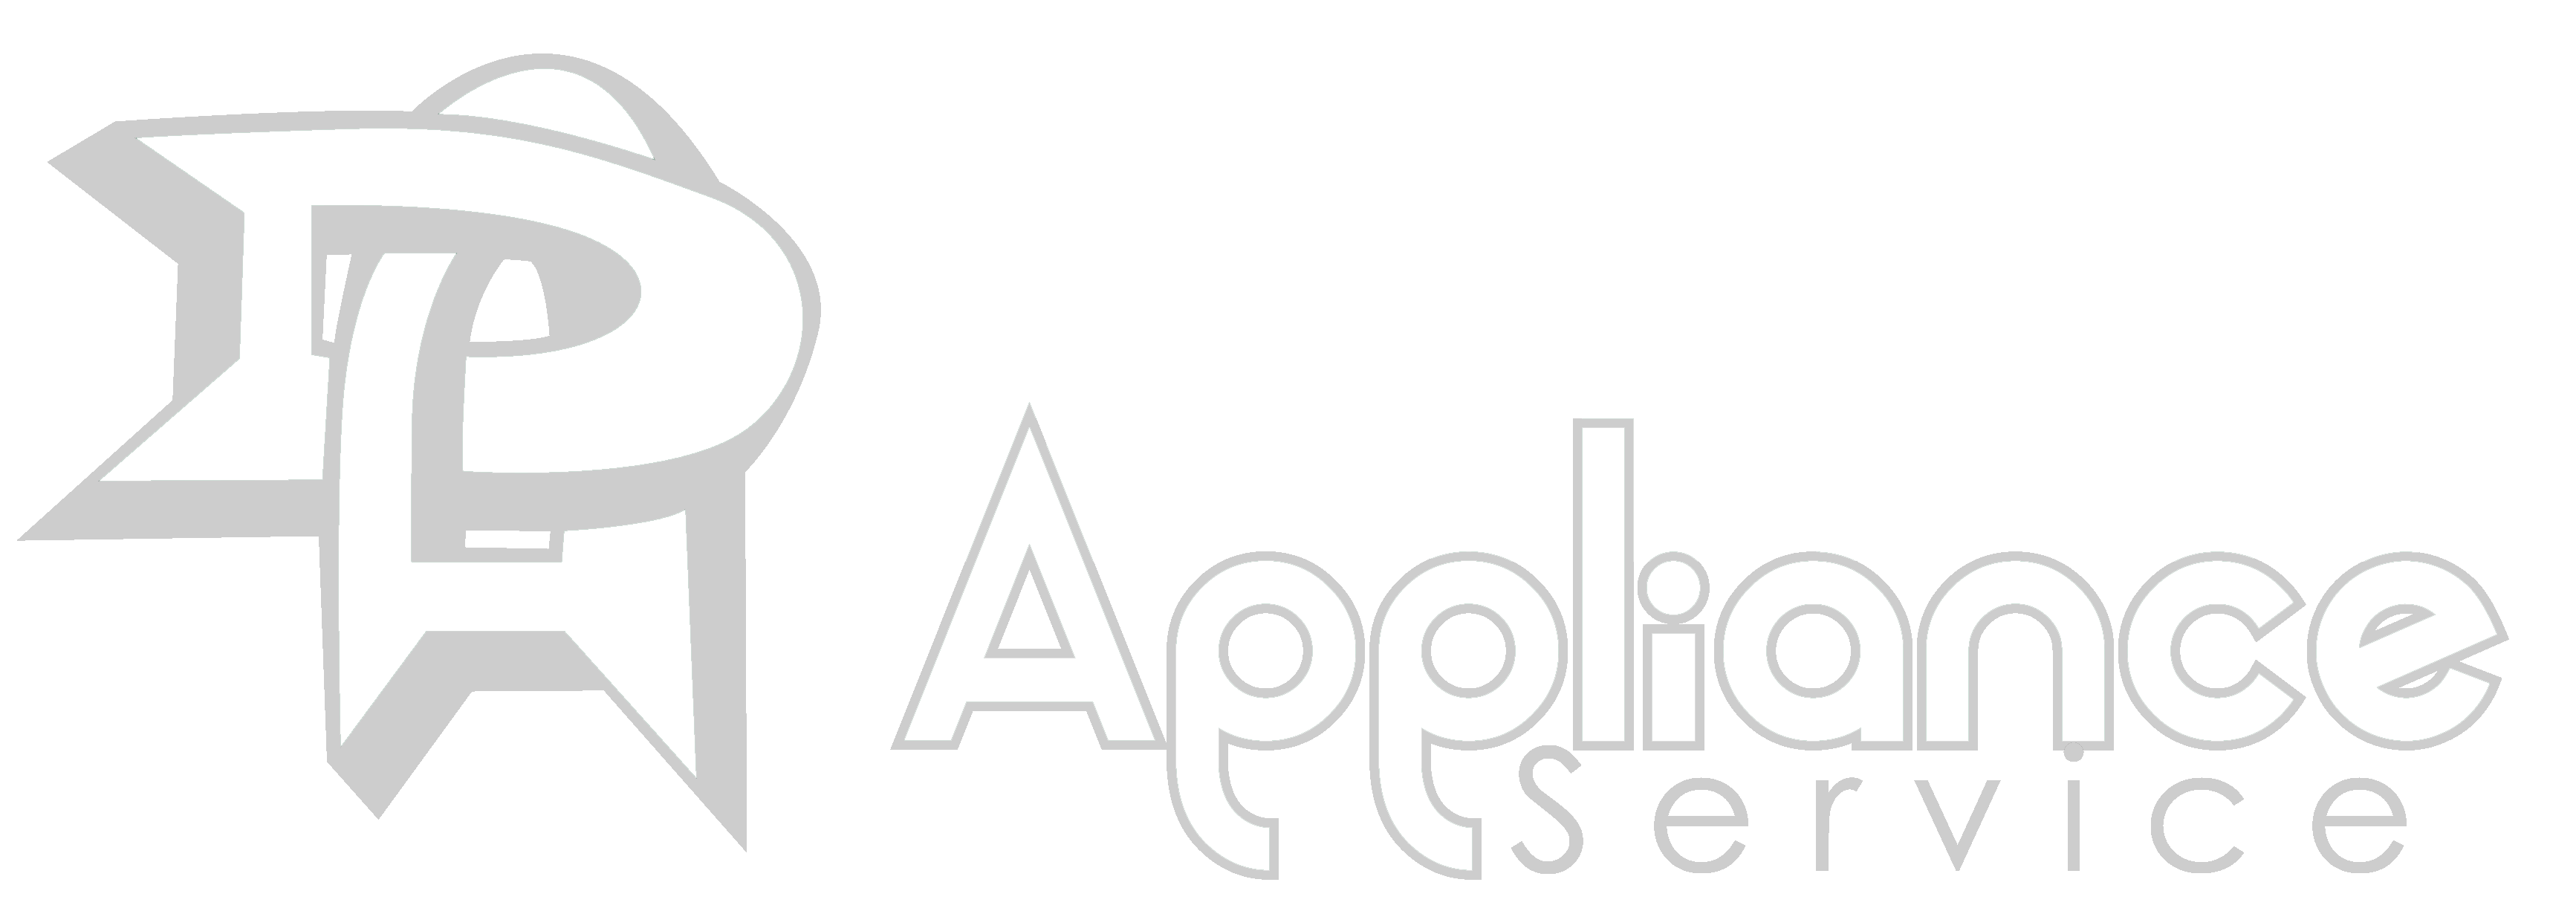 Davis Appliance Service LLC